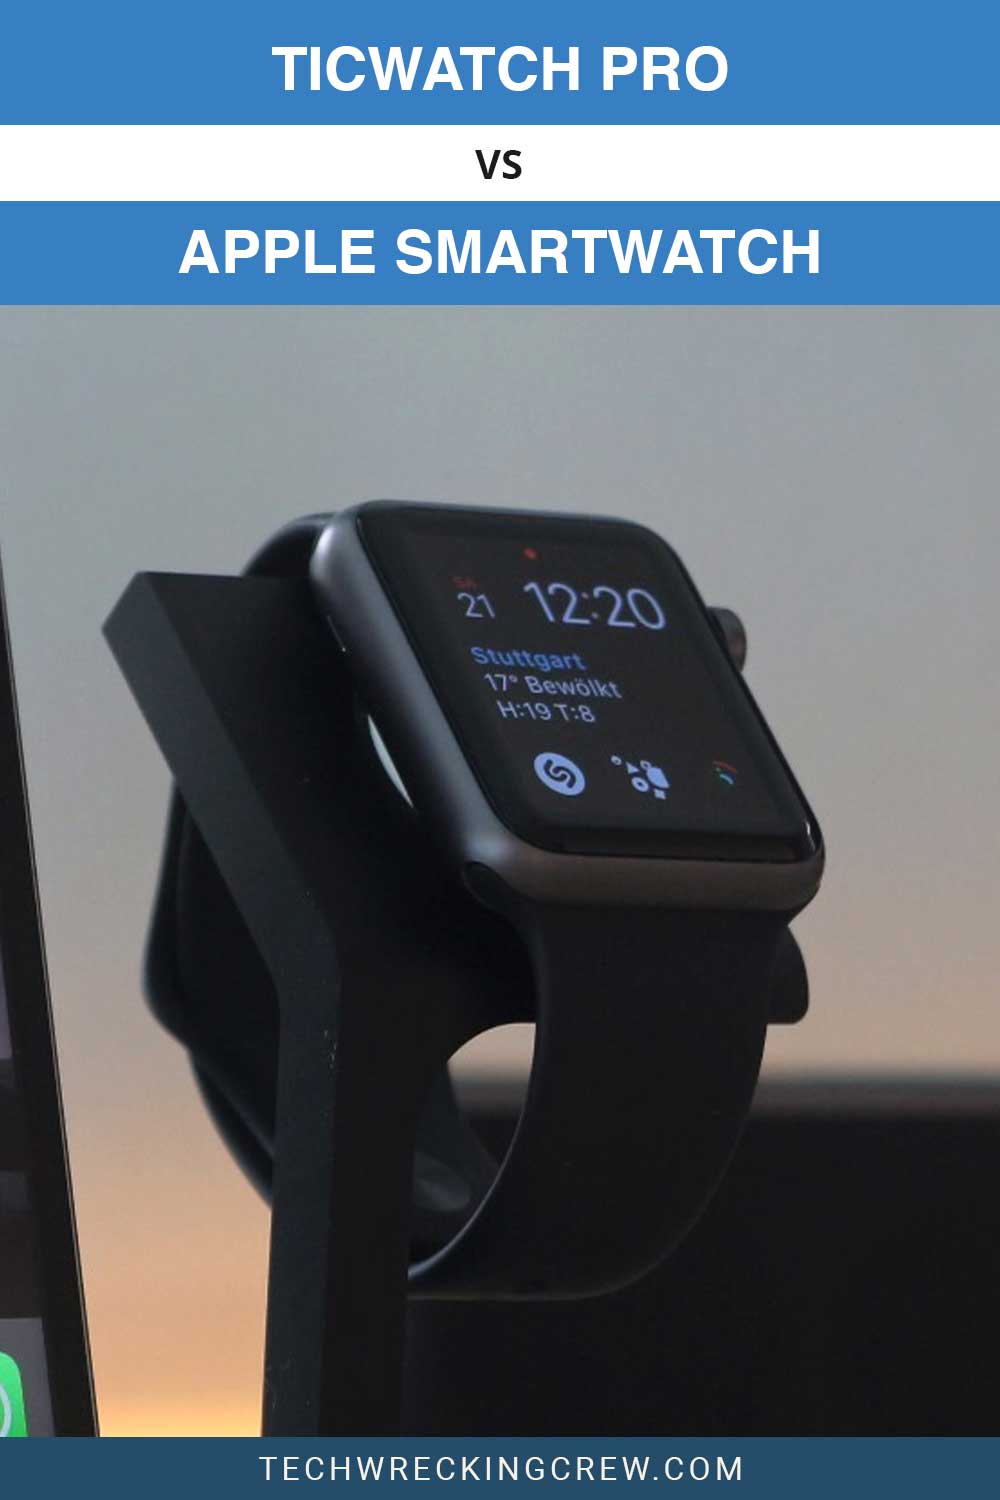 TicWatch Pro vs. Apple Smartwatch